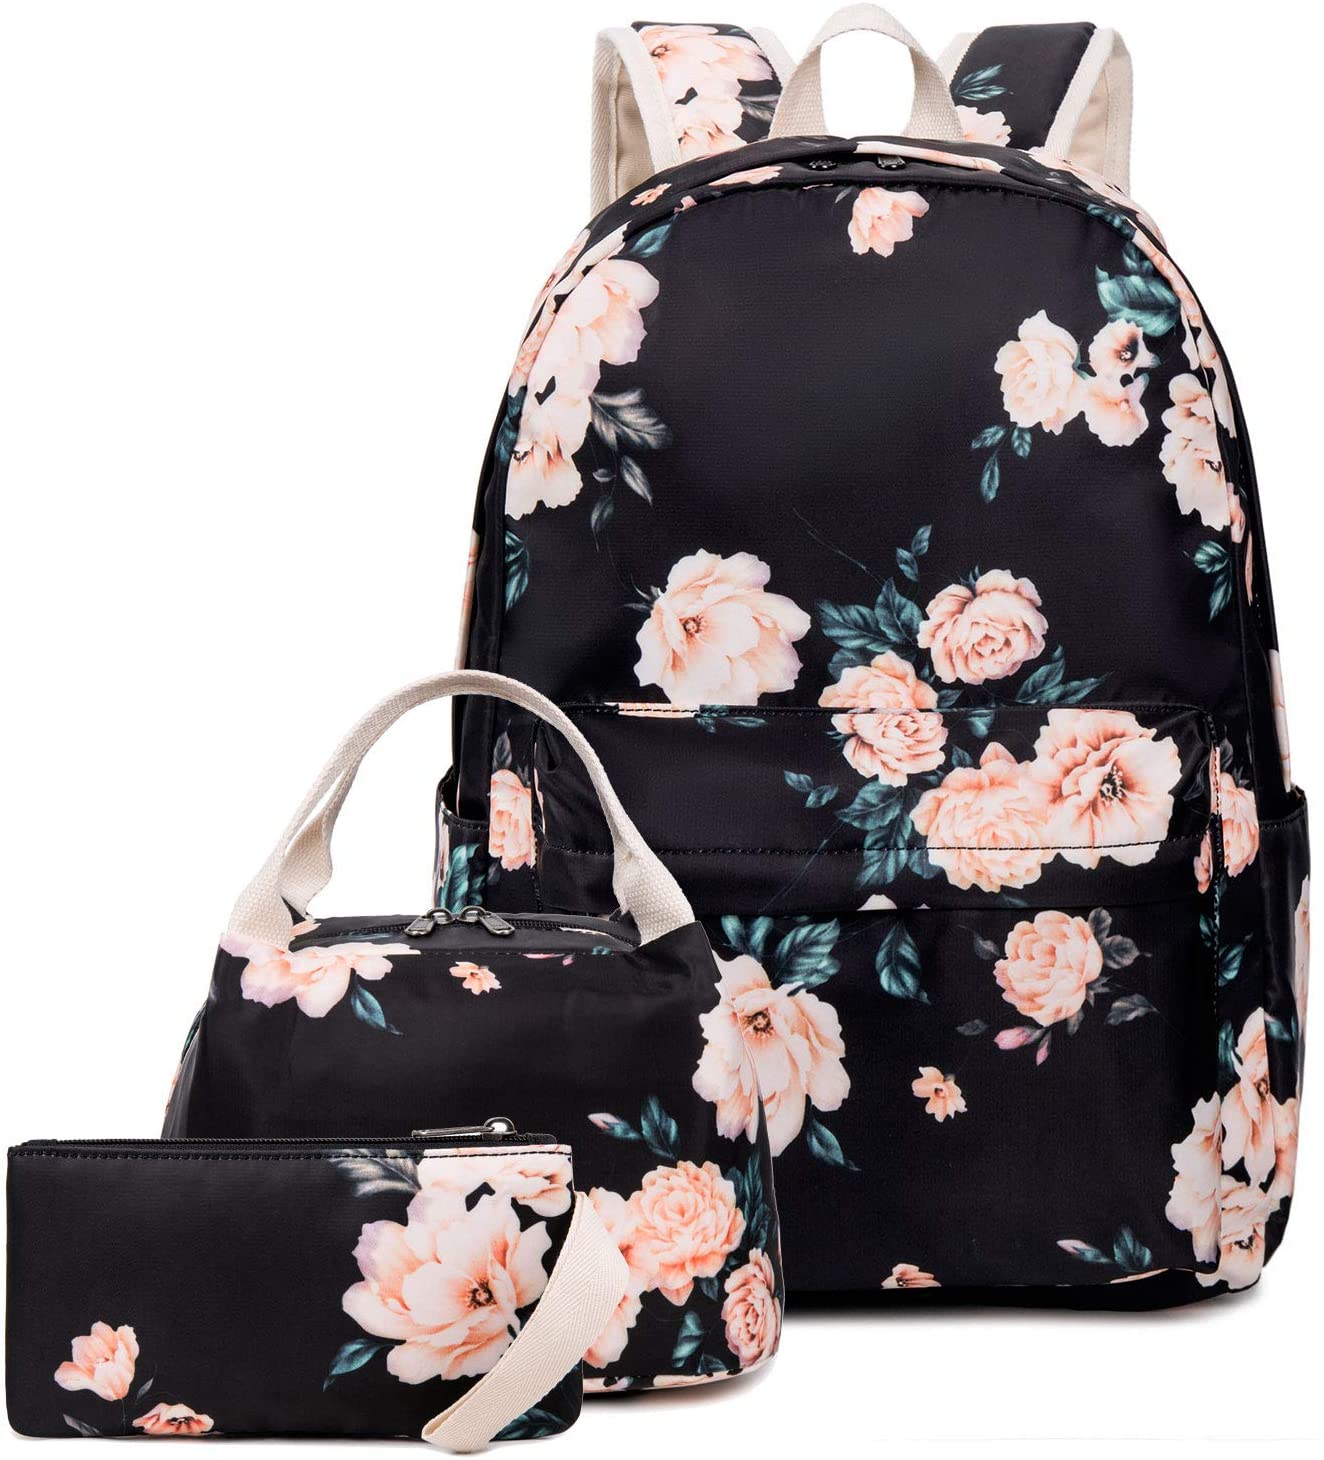 Goodking Floral Canvas Backpack for Women Teen Girls School Rucksack College Bookbag 